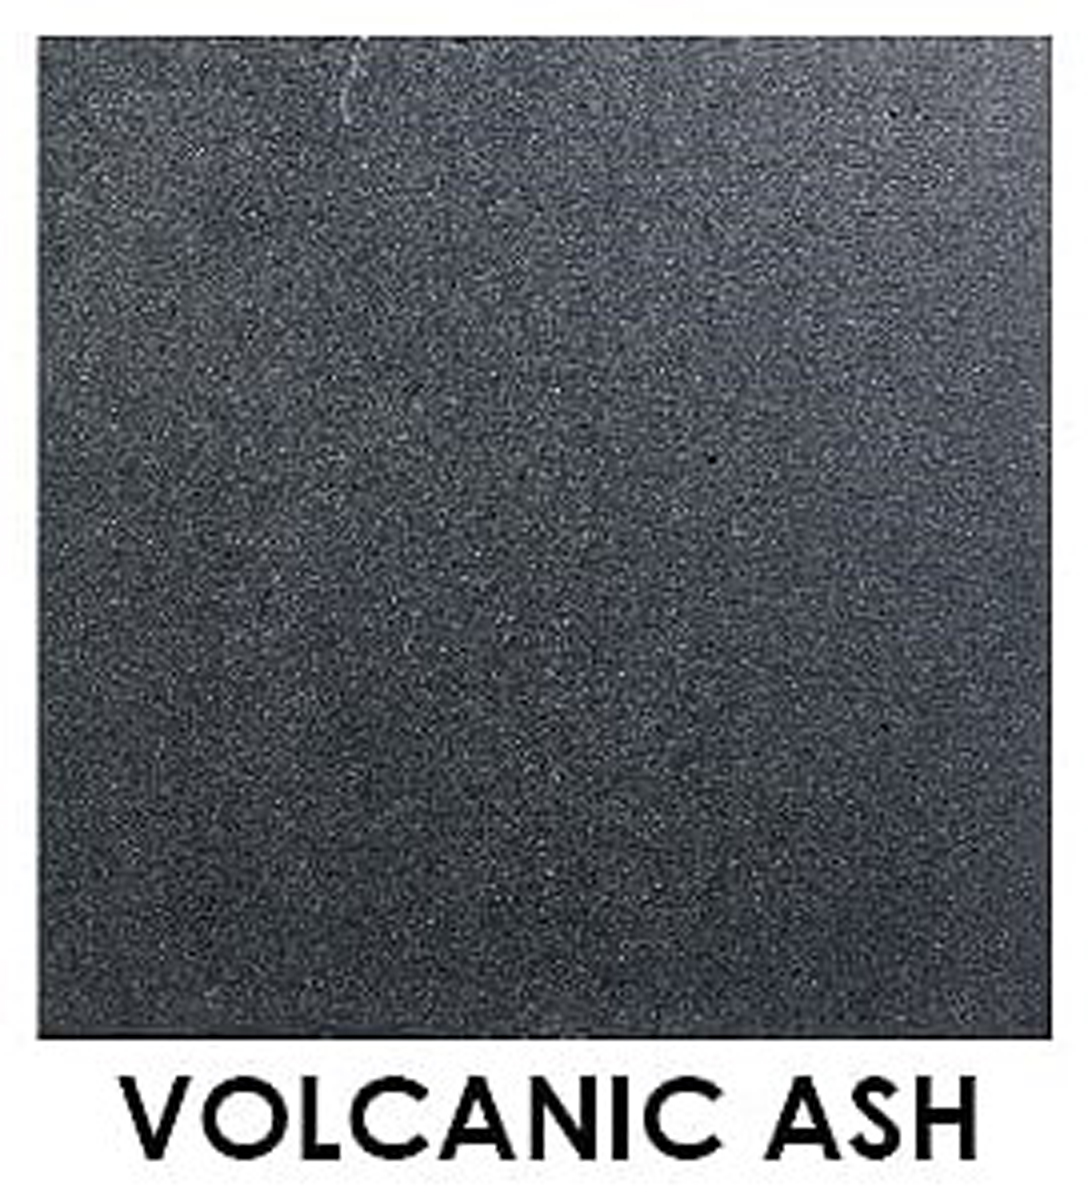 21 inch falo fire bowl – volcanic ash thumbnail image